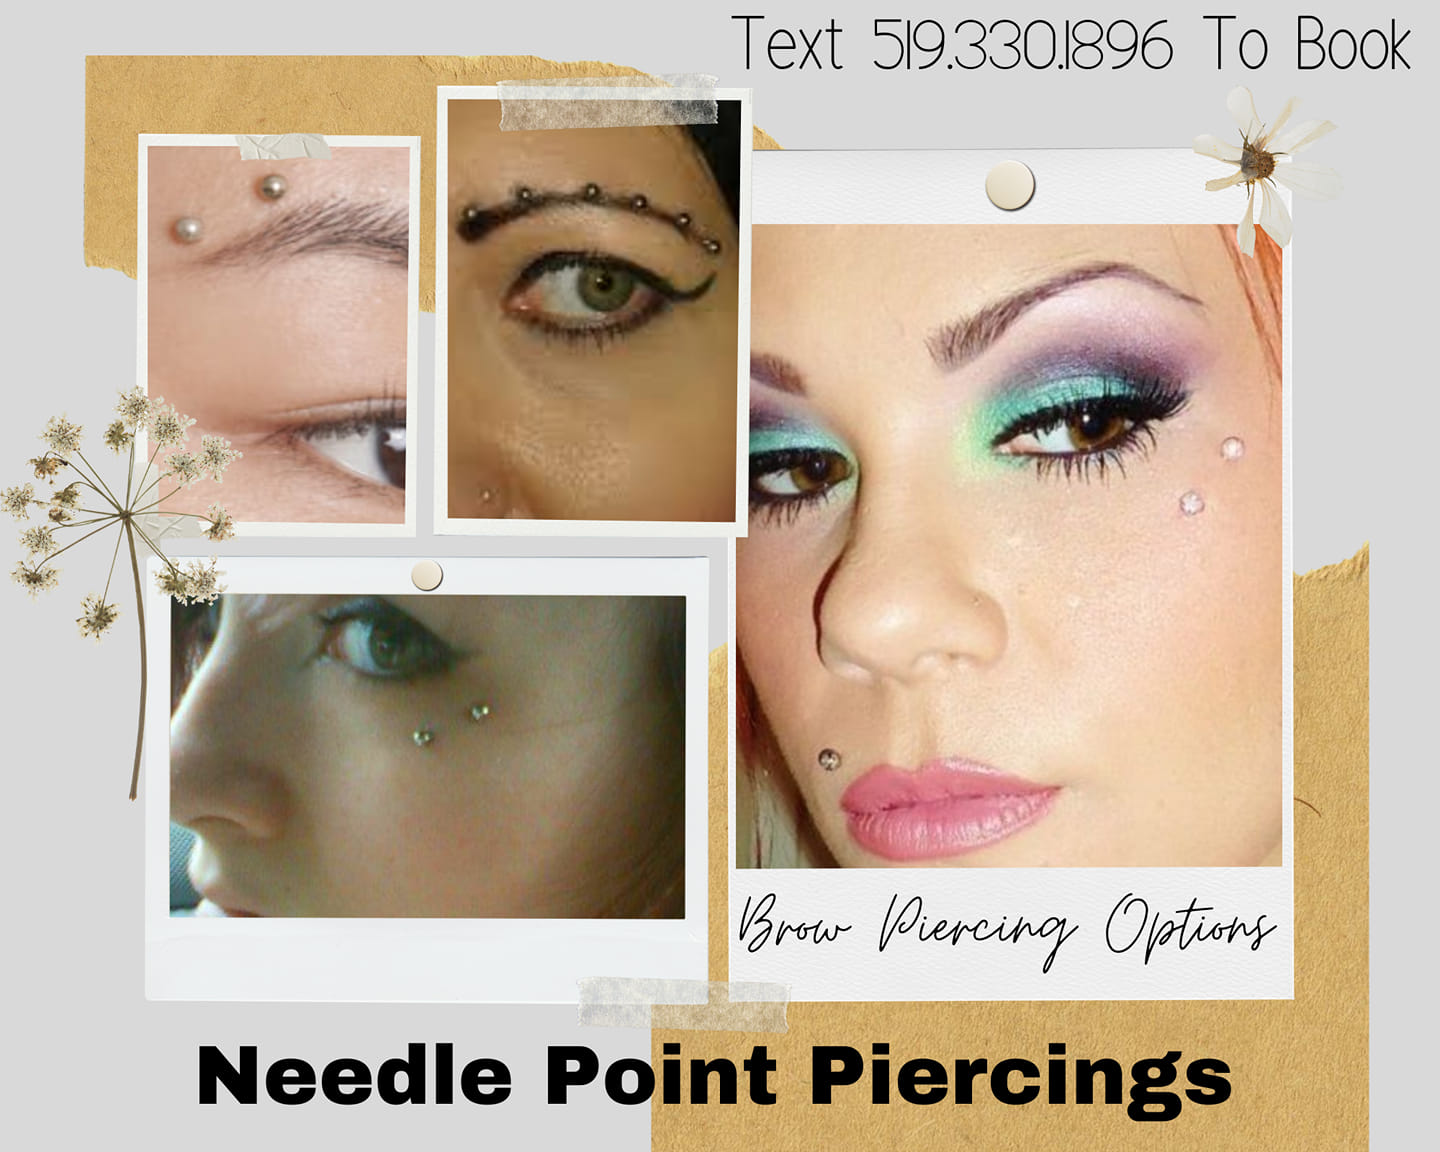 Needle Point Piercings 318 Homestretch Dr #2, Corunna Ontario N0N 1G0